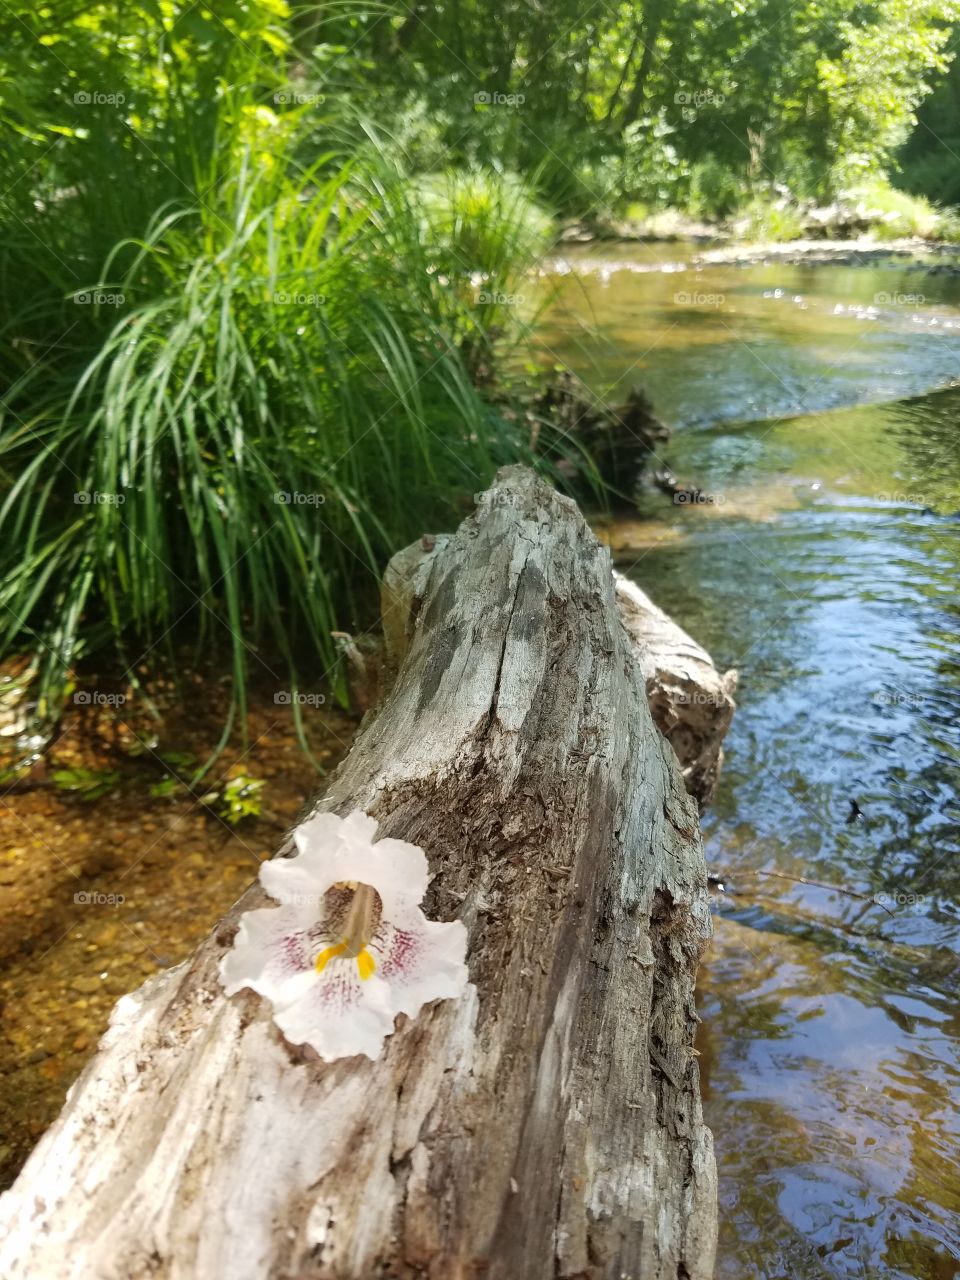 River flower on tree trunk